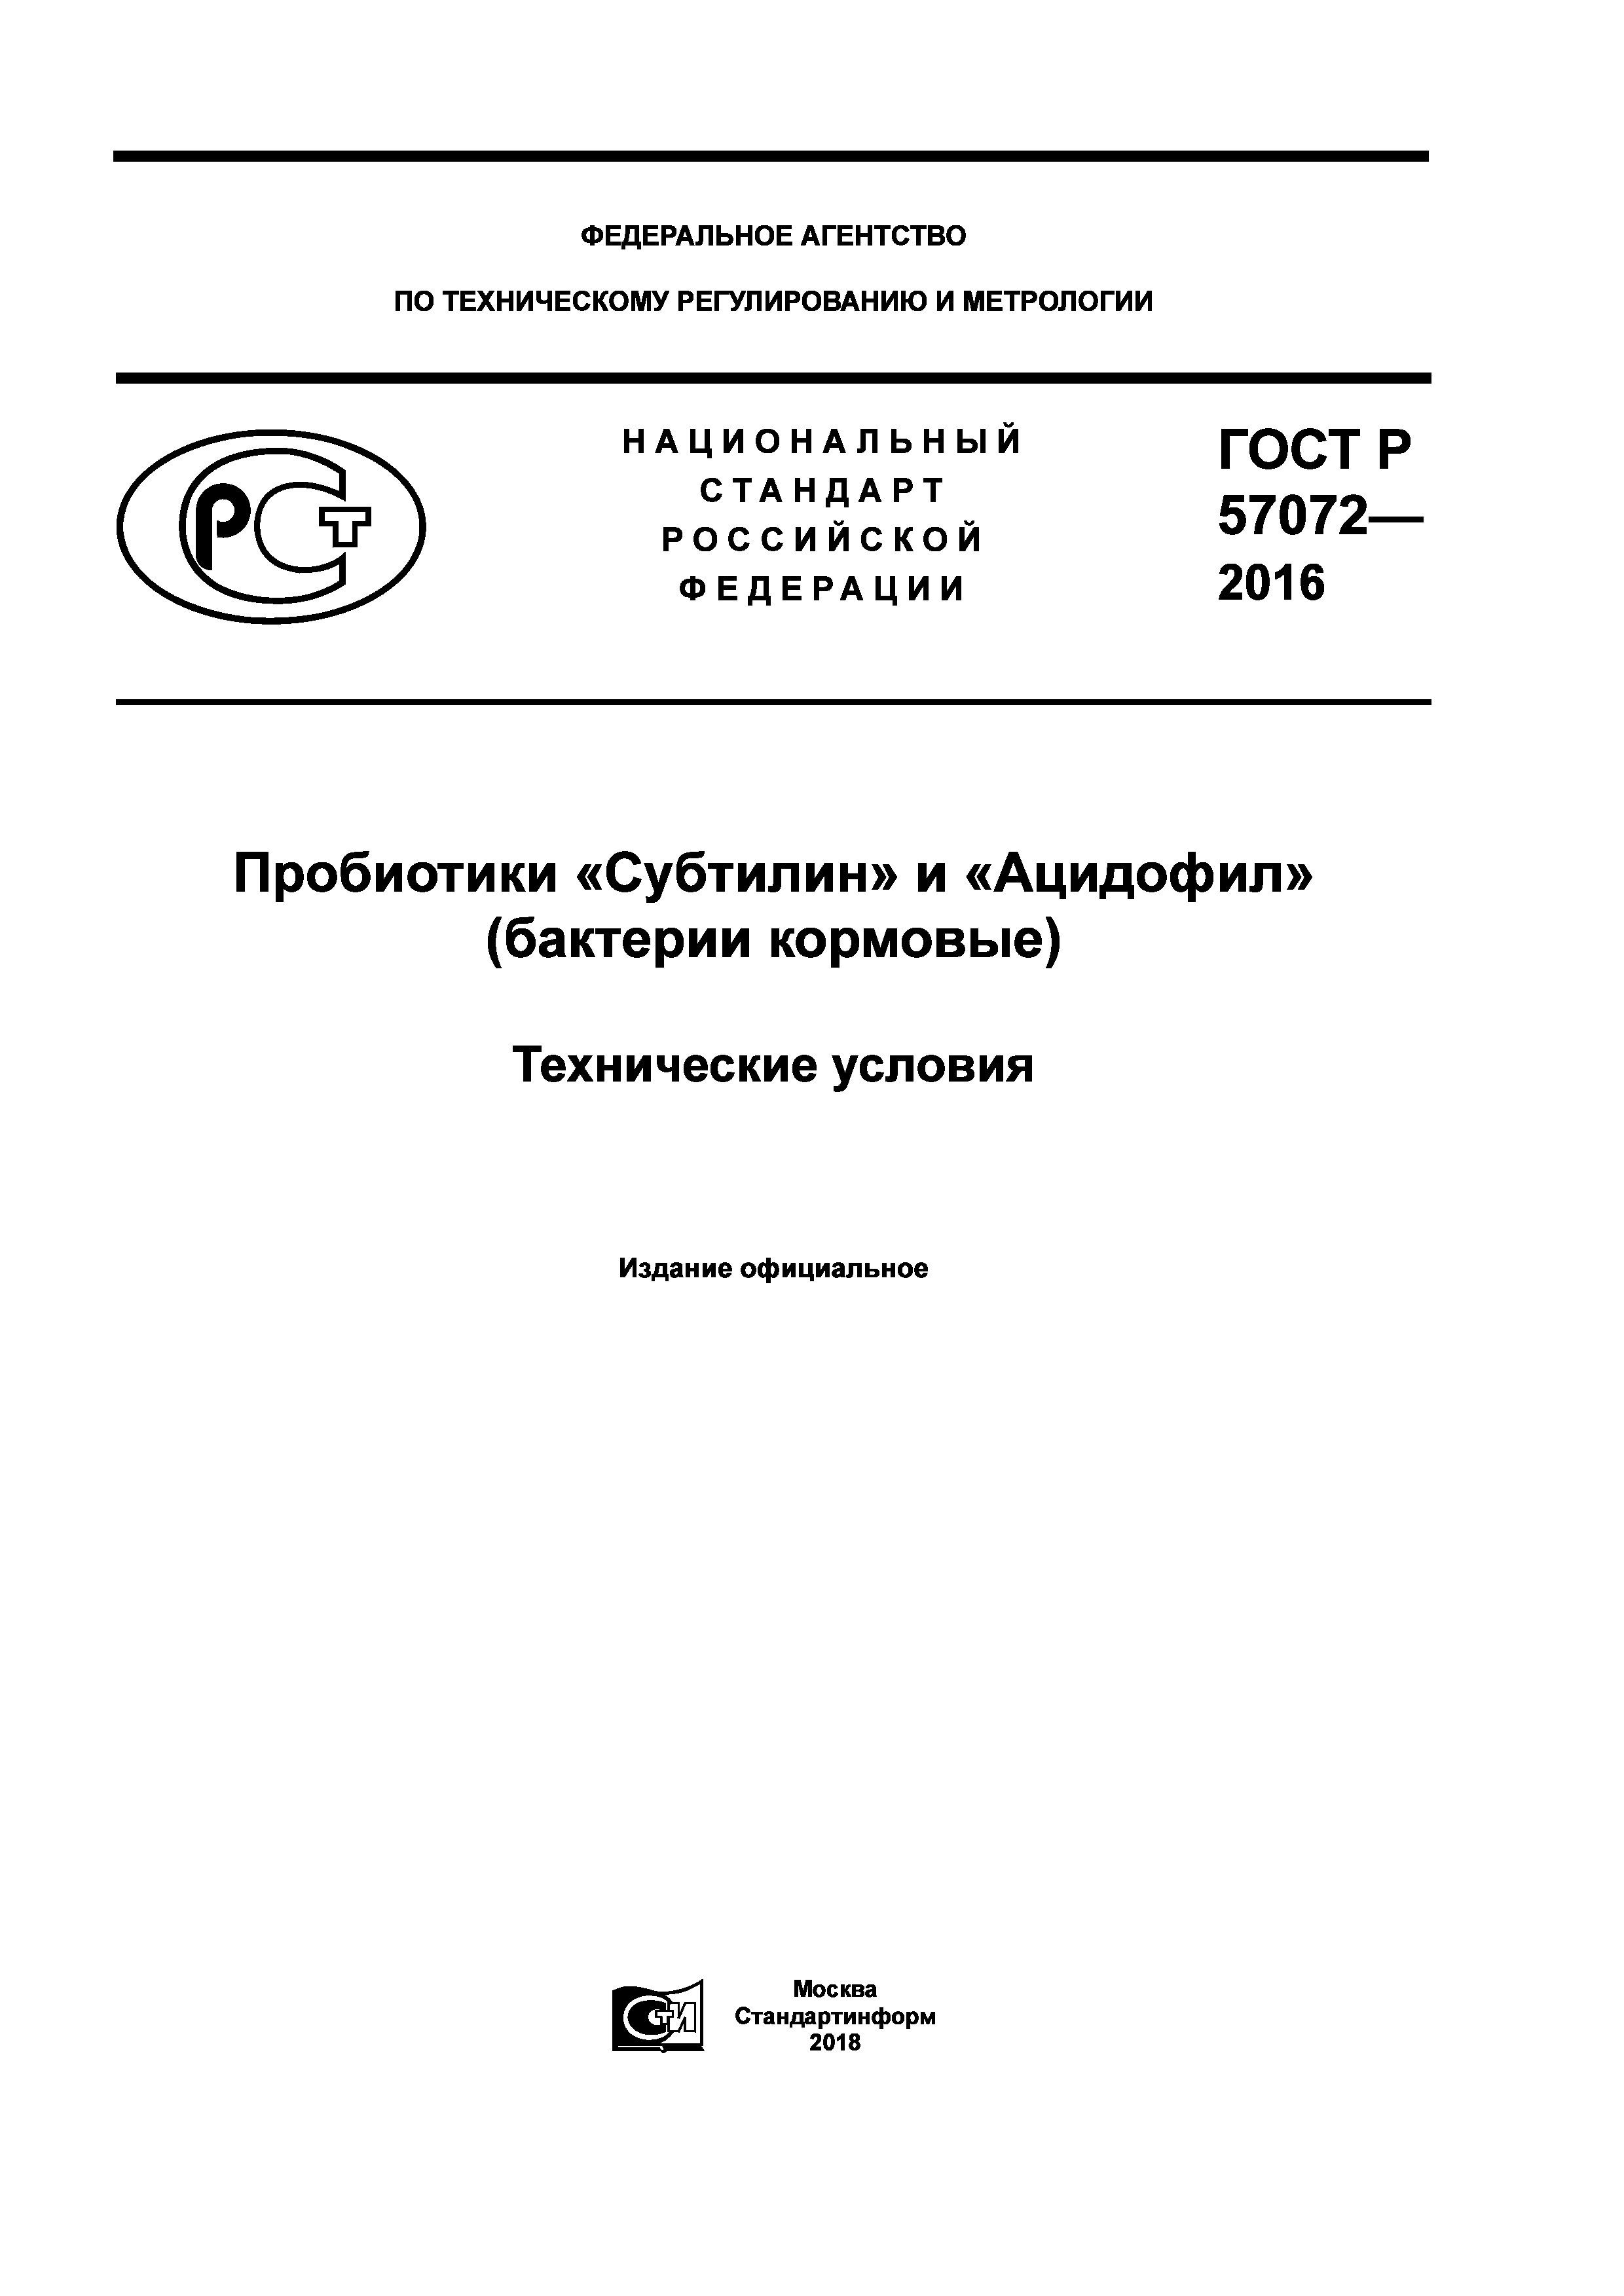 ГОСТ Р 57072-2016